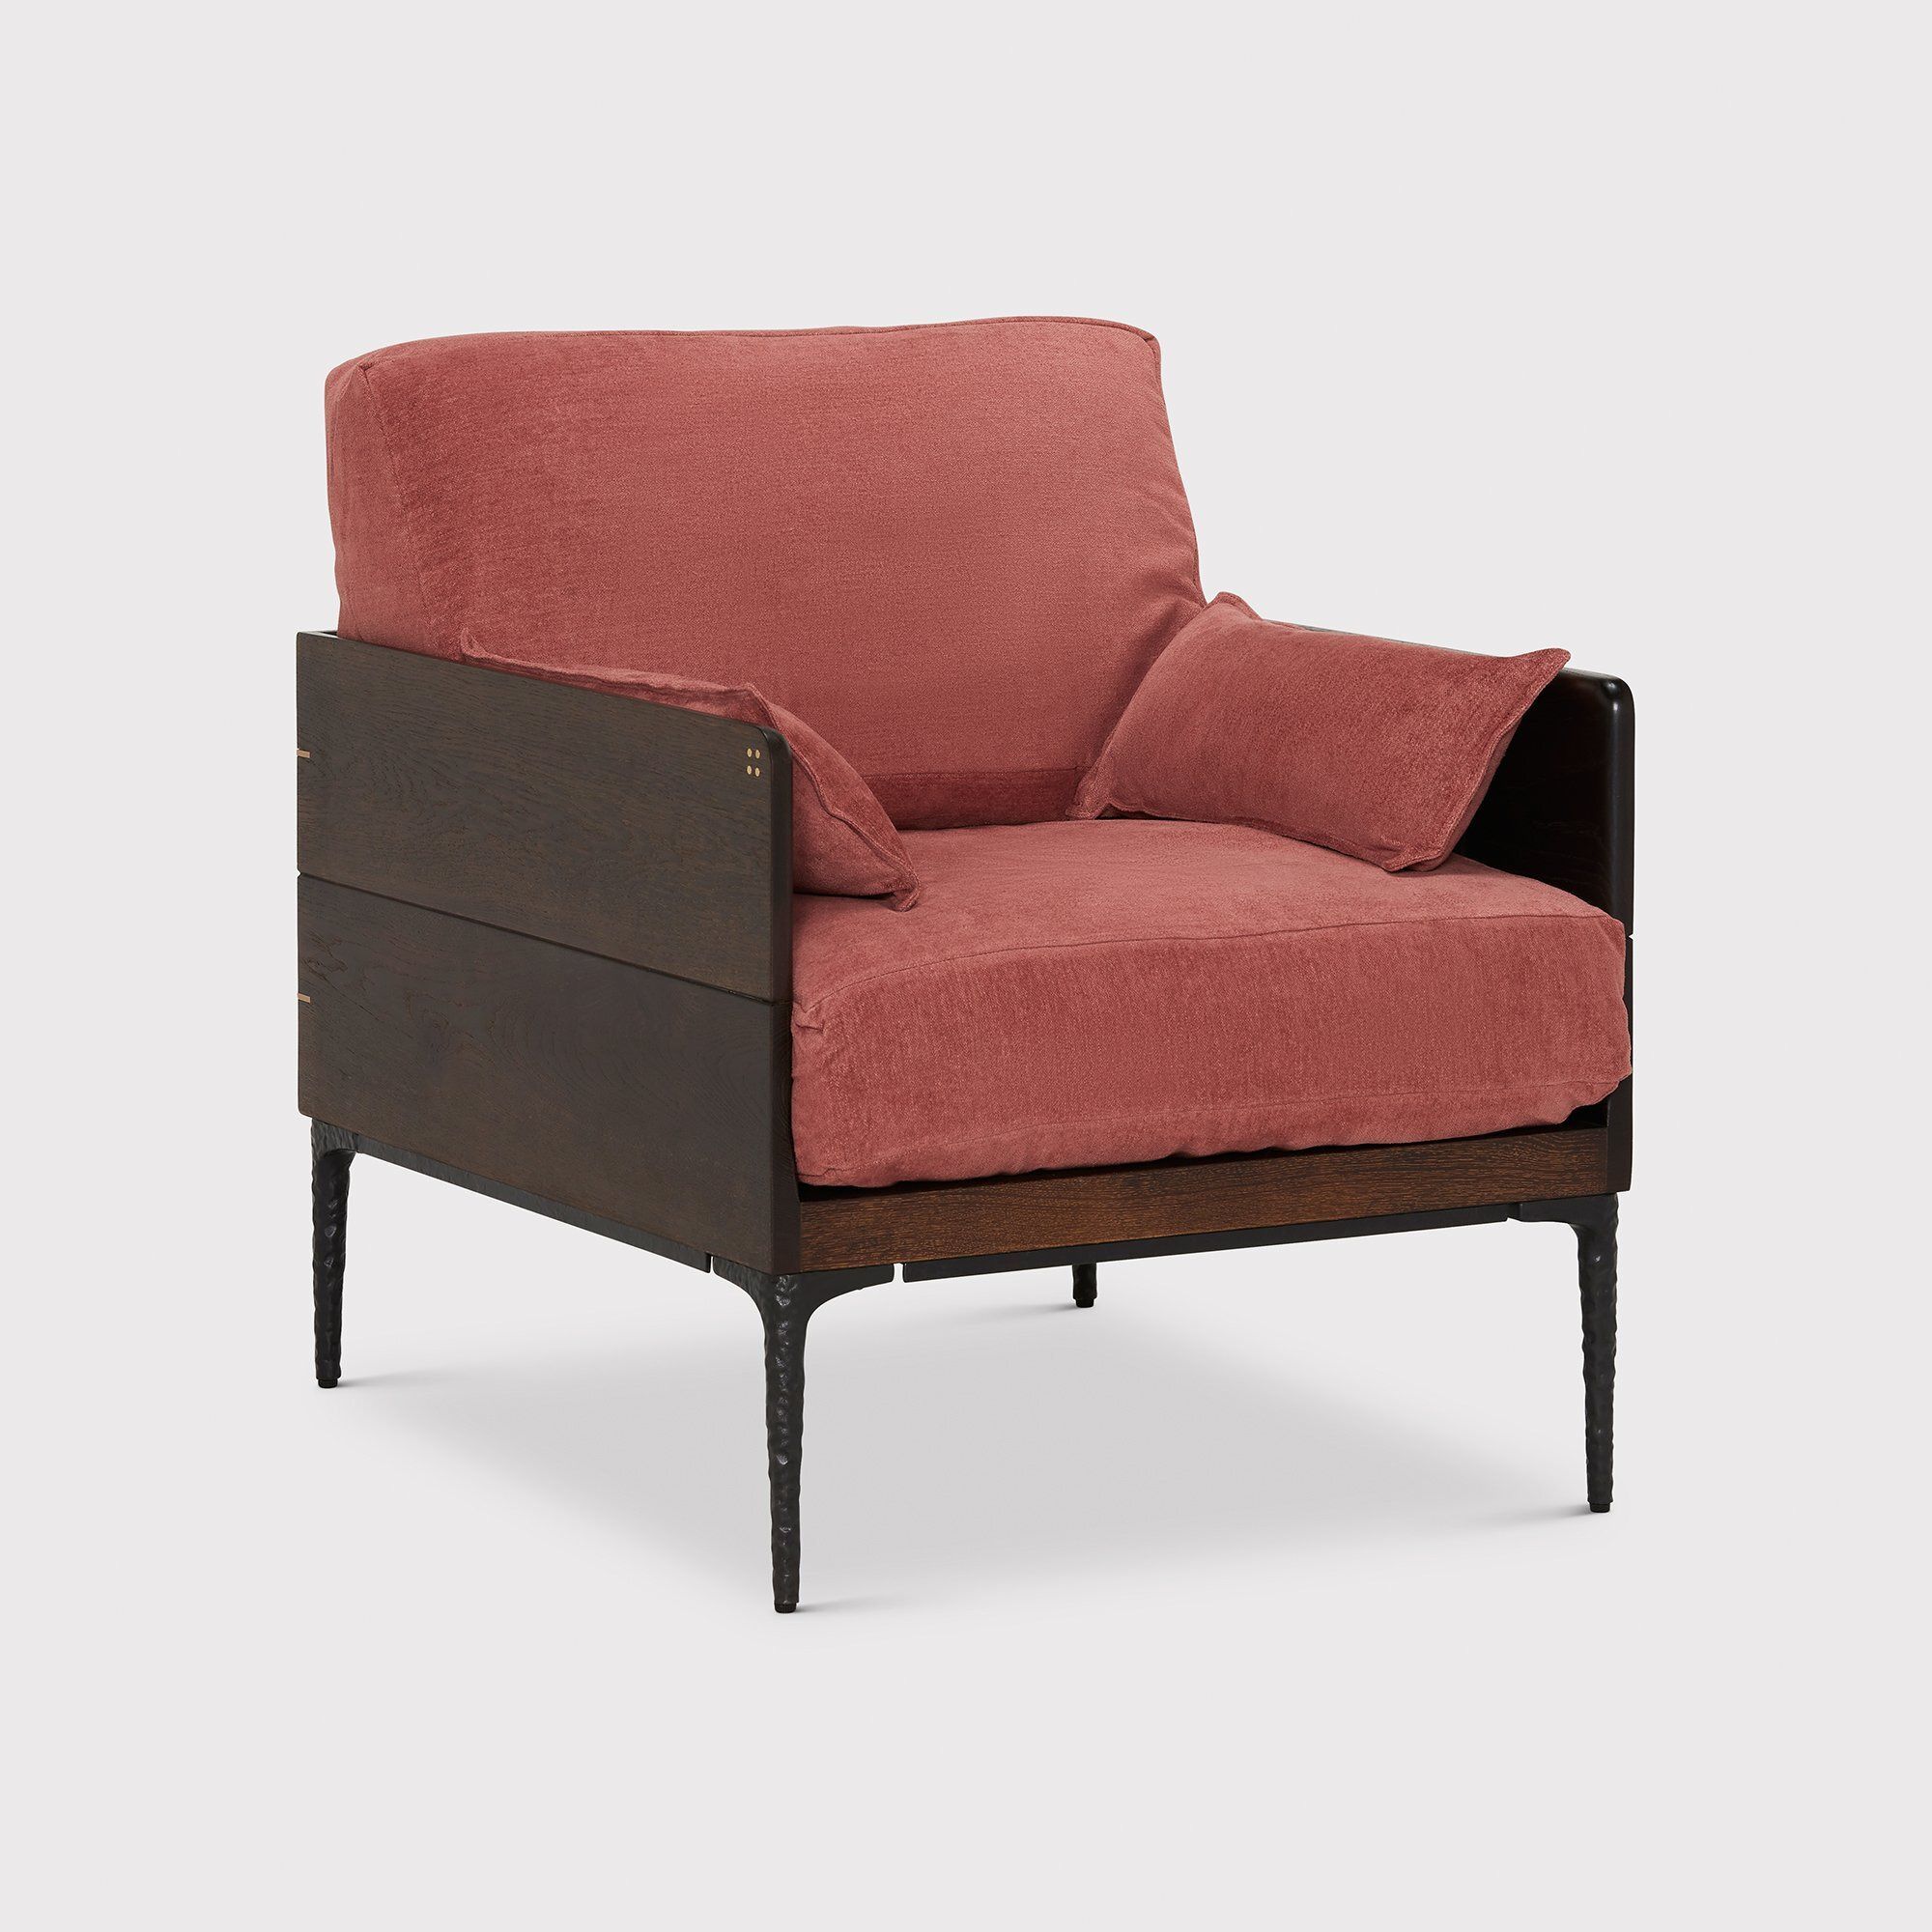 Bozan Armchair, Red Fabric - Barker & Stonehouse - image 1